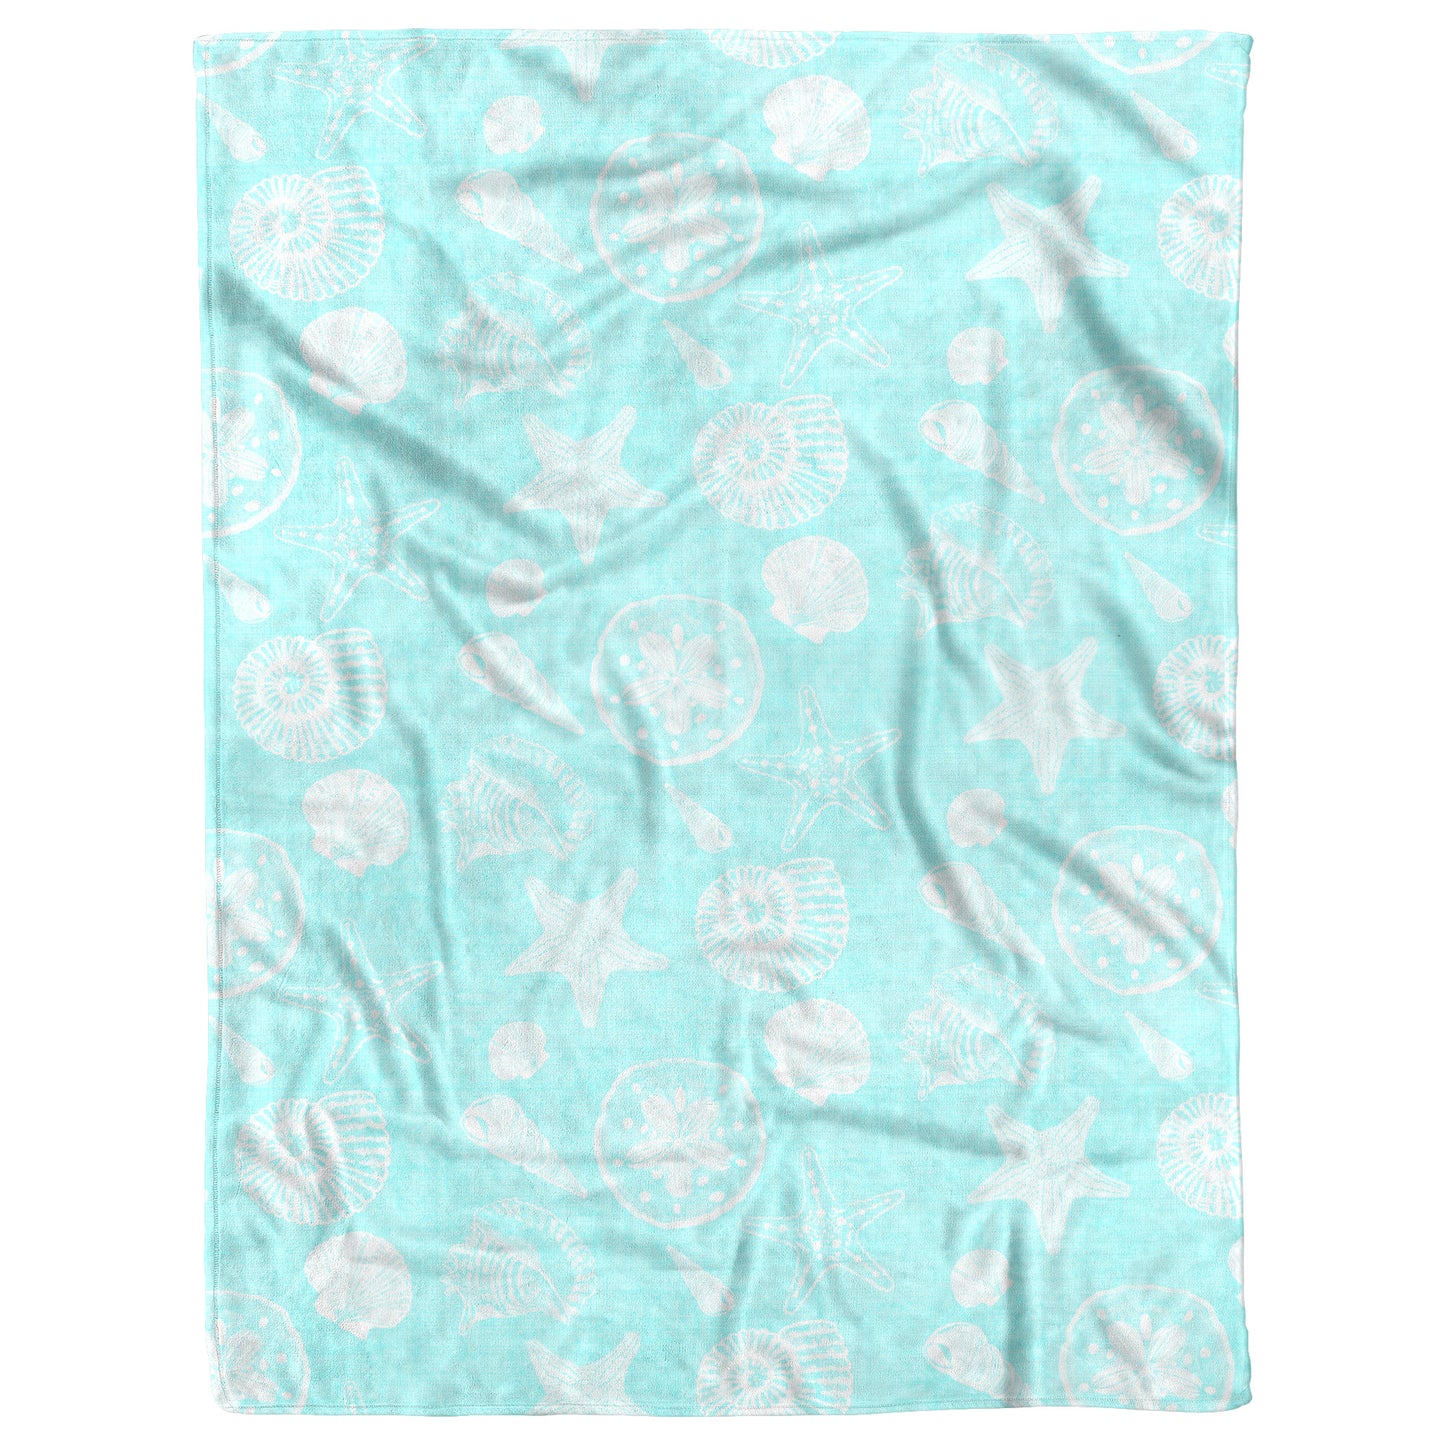 Seashell Sketches on Coastal Blue Linen Texture Background, Fleece Blanket